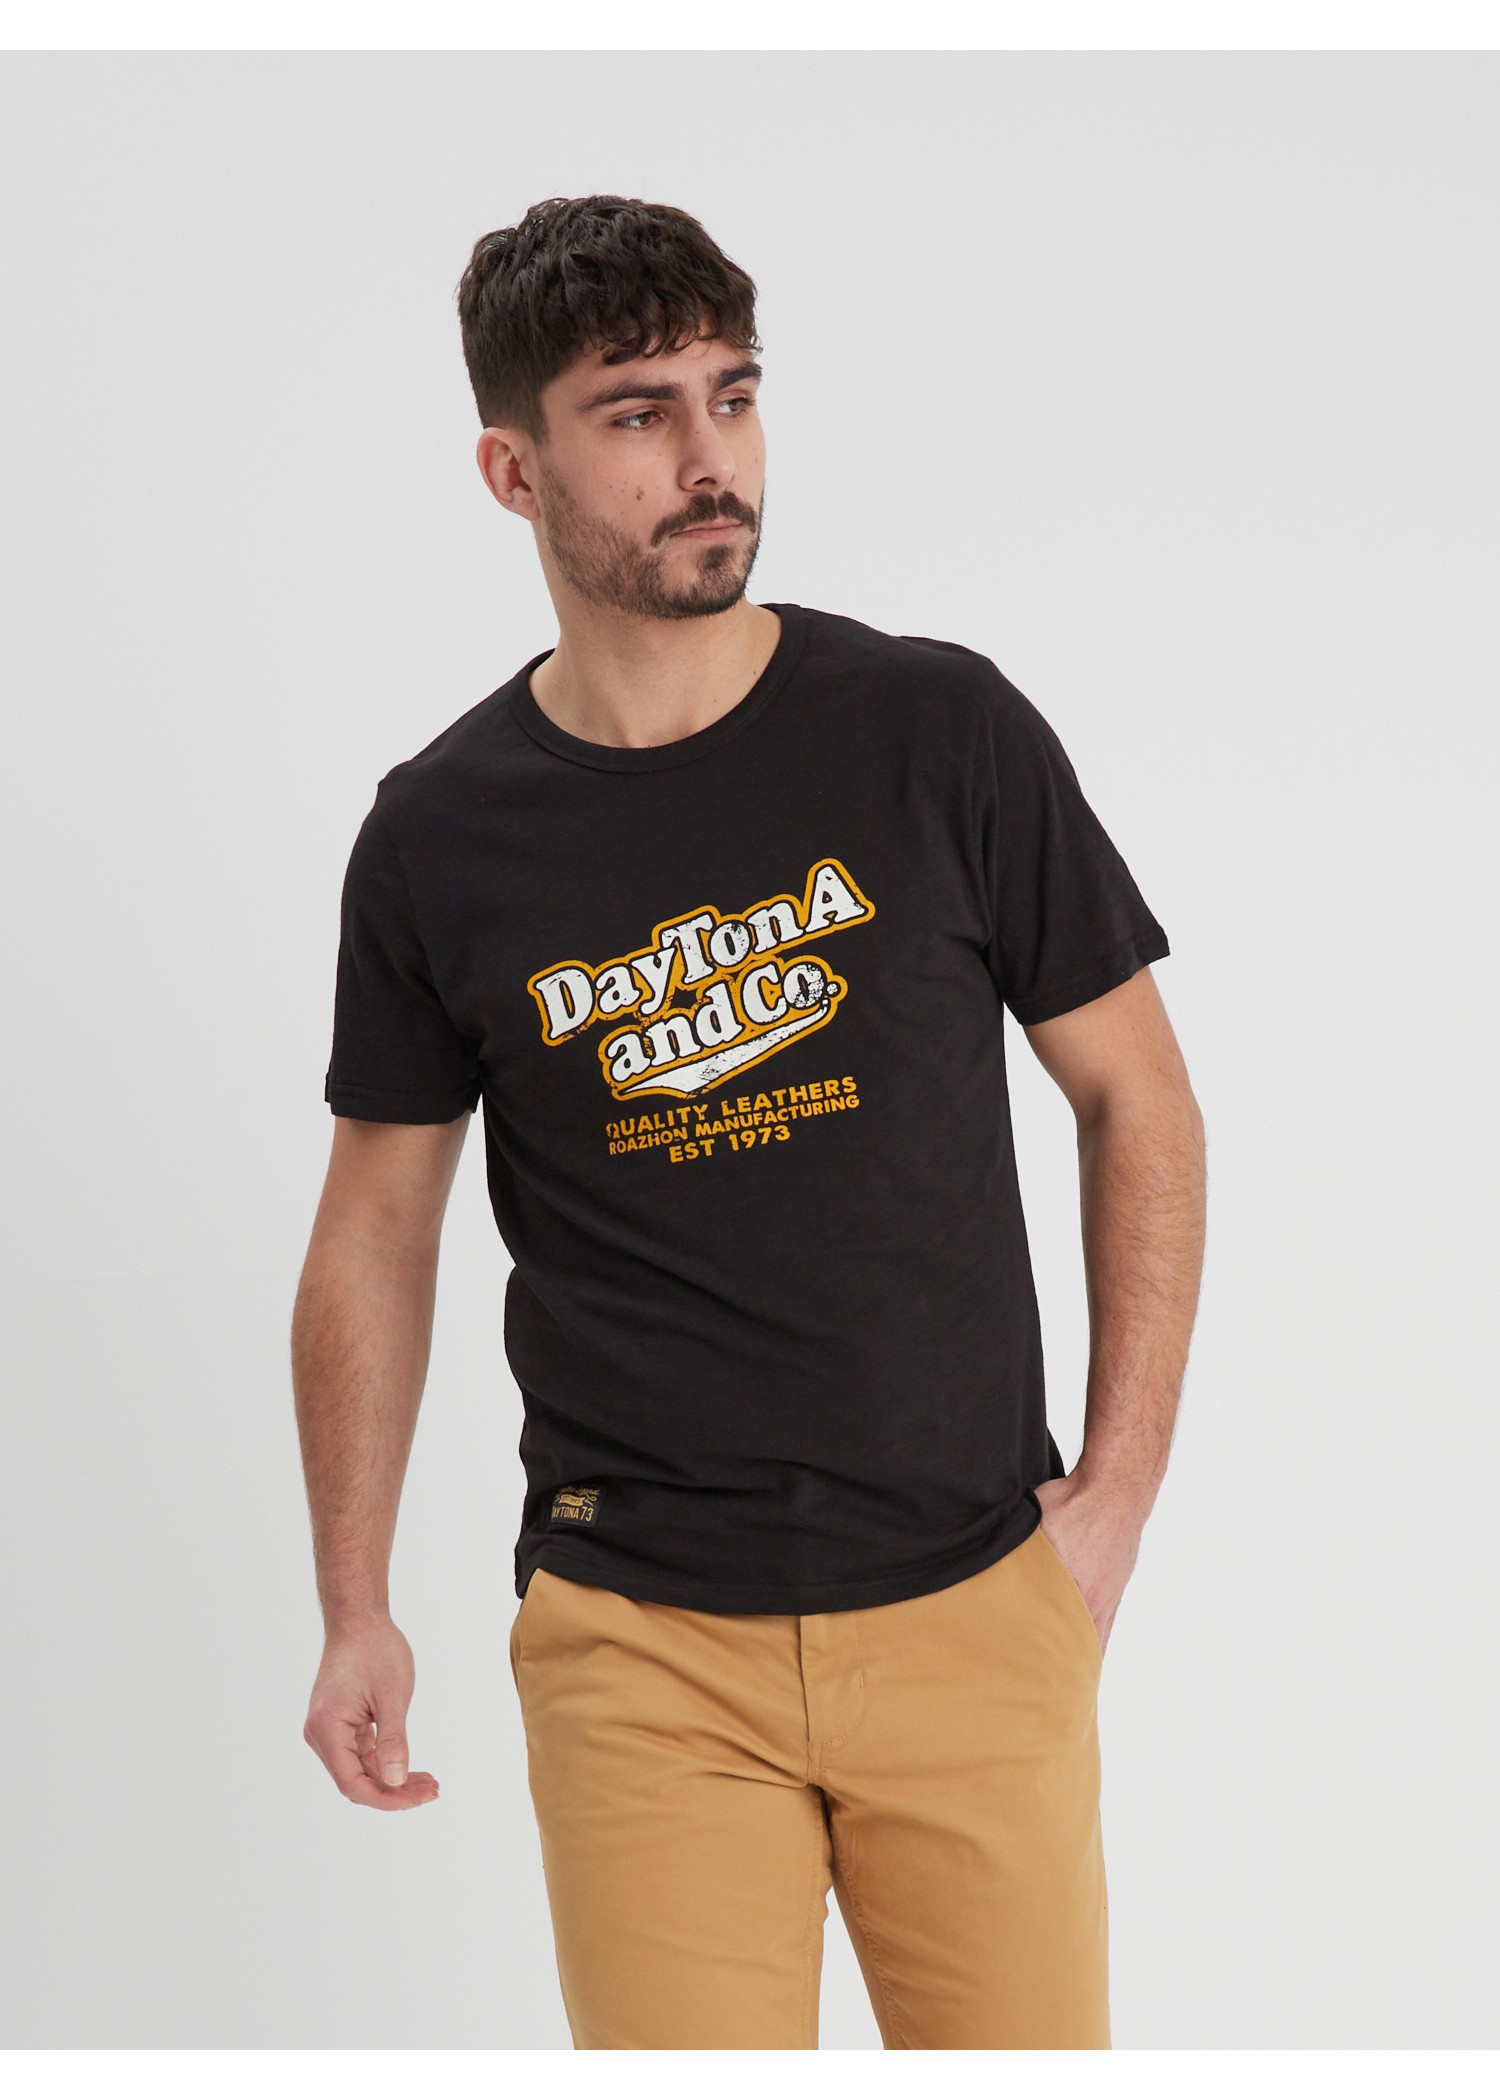 Gering - T-shirt vintage homme - Accueil